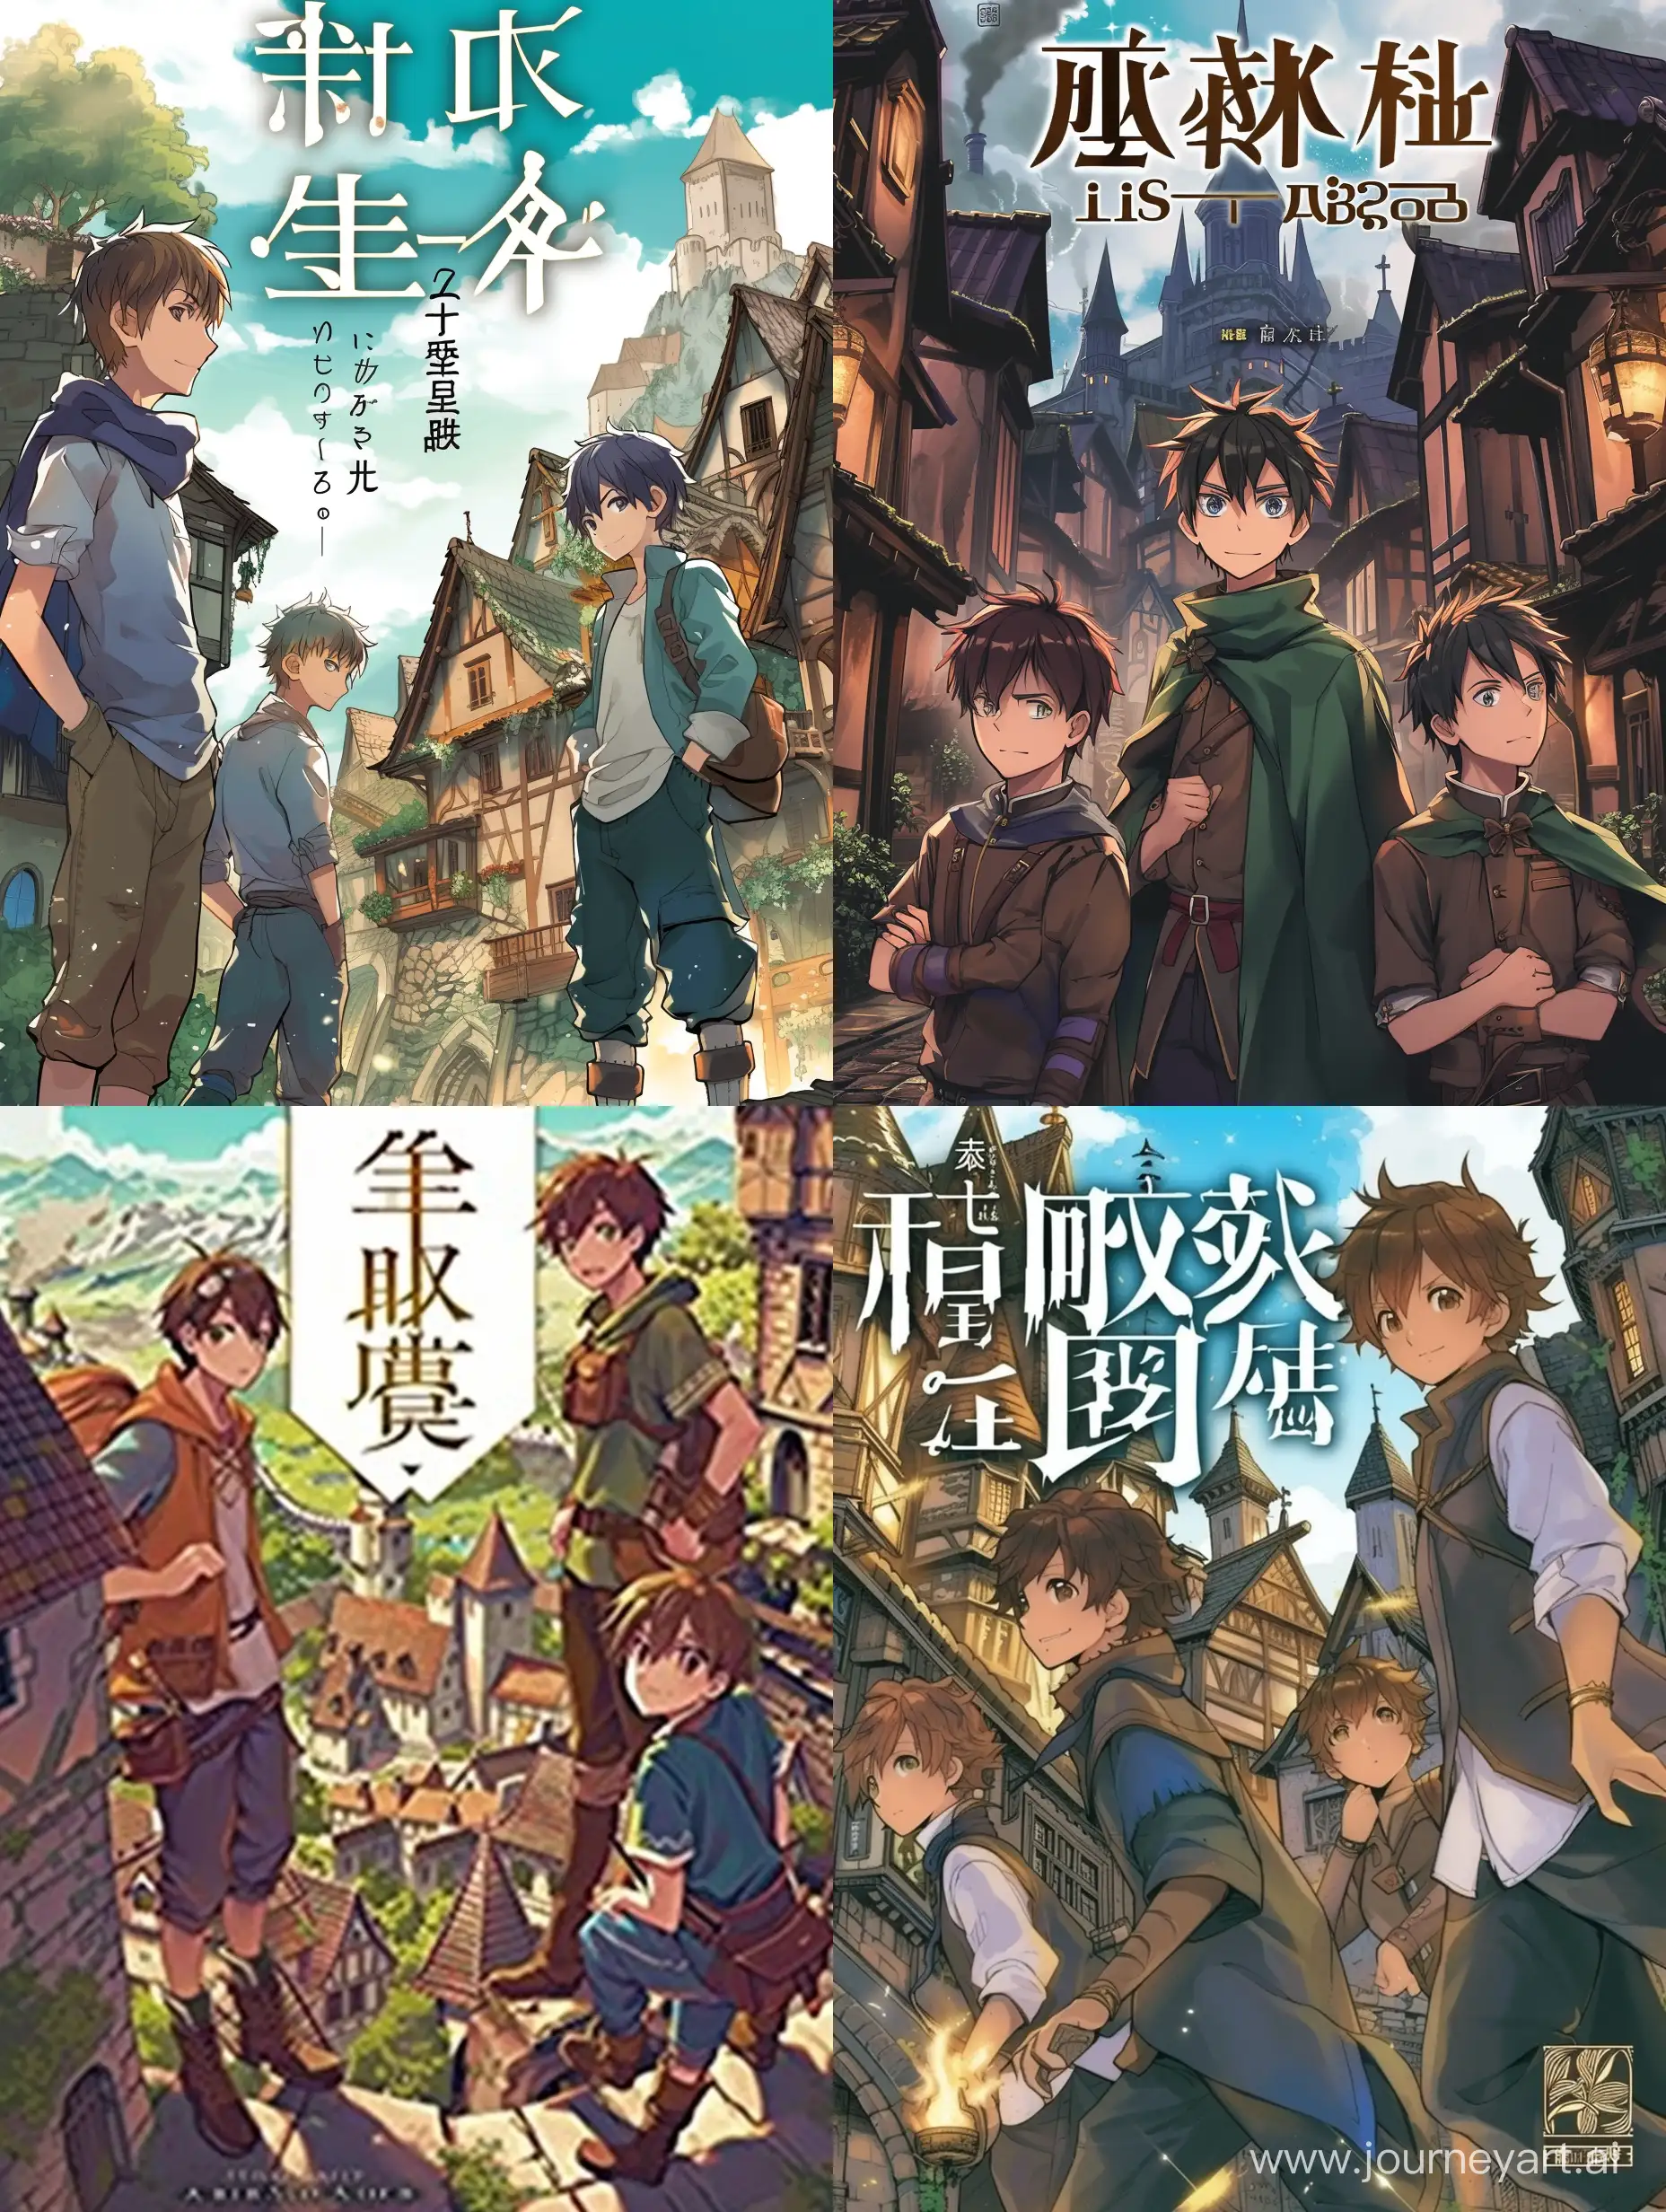 Three-Boys-in-a-Fantasy-World-with-Buildings-Fantasy-Isekai-Novel-Cover